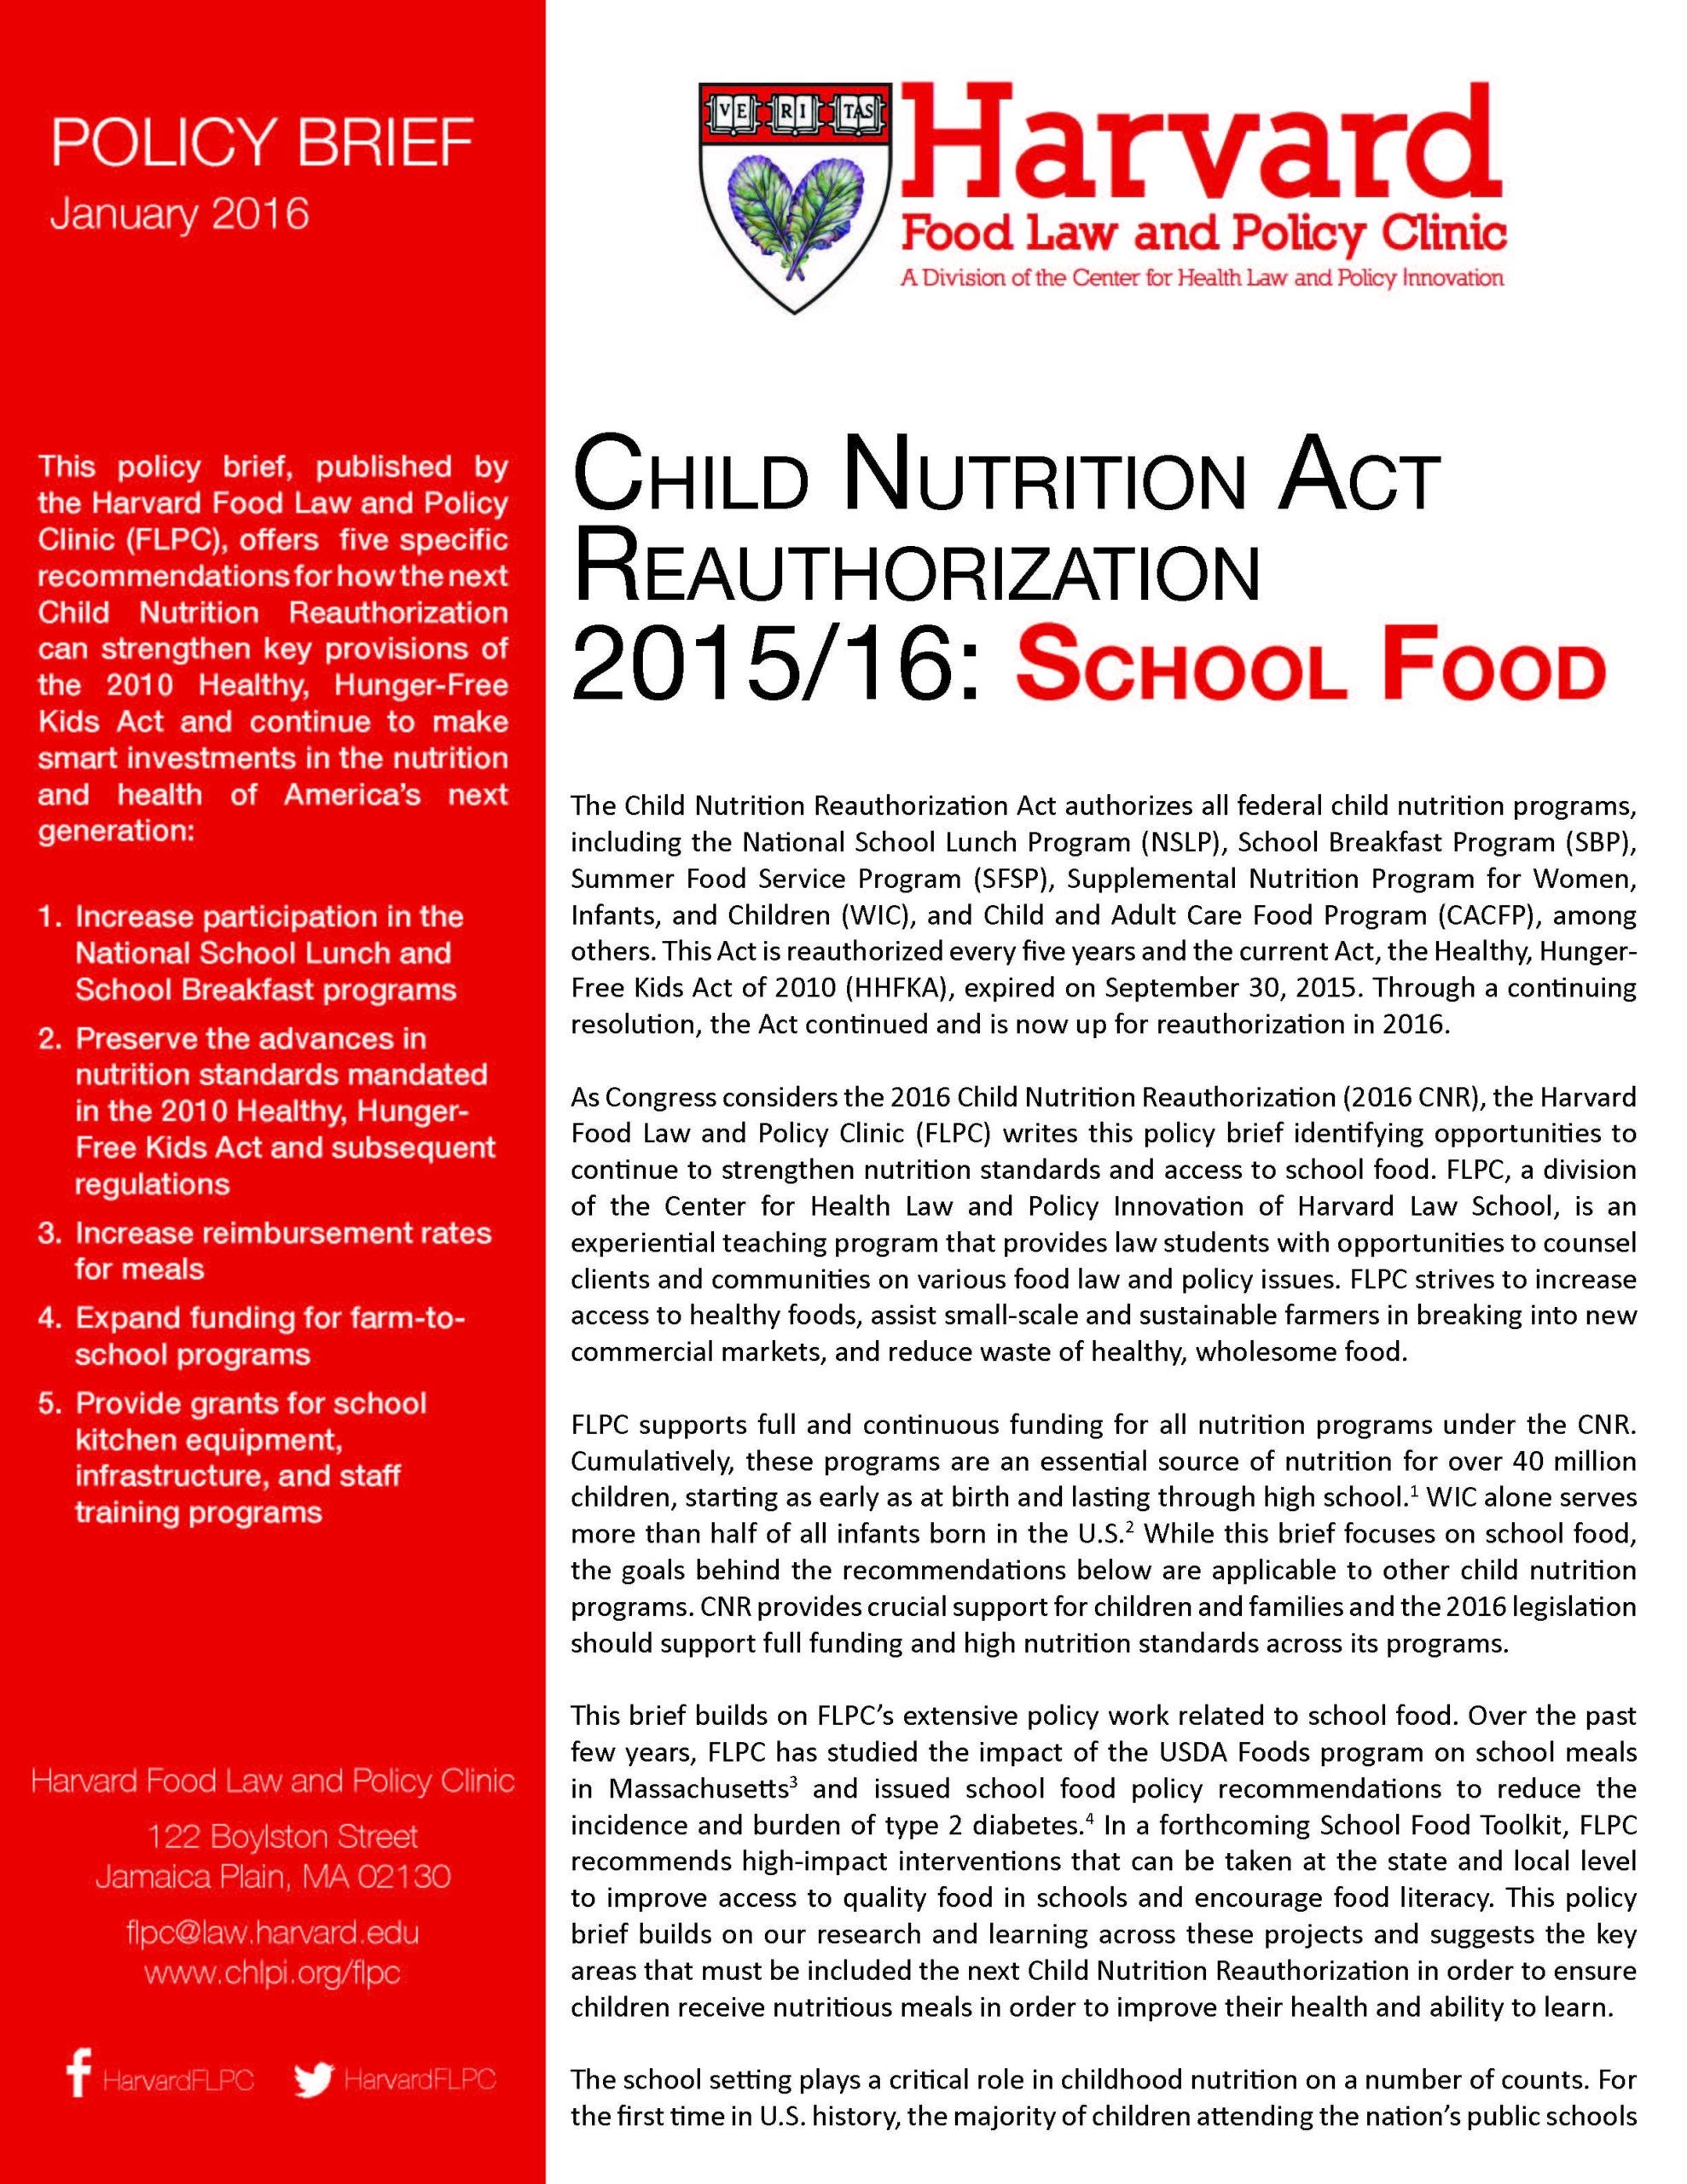 https://hls.harvard.edu/wp-content/uploads/2022/05/FLPC_Child-Nutrition-Reauthorization-Policy-Brief-Jan-2016-scaled.jpg